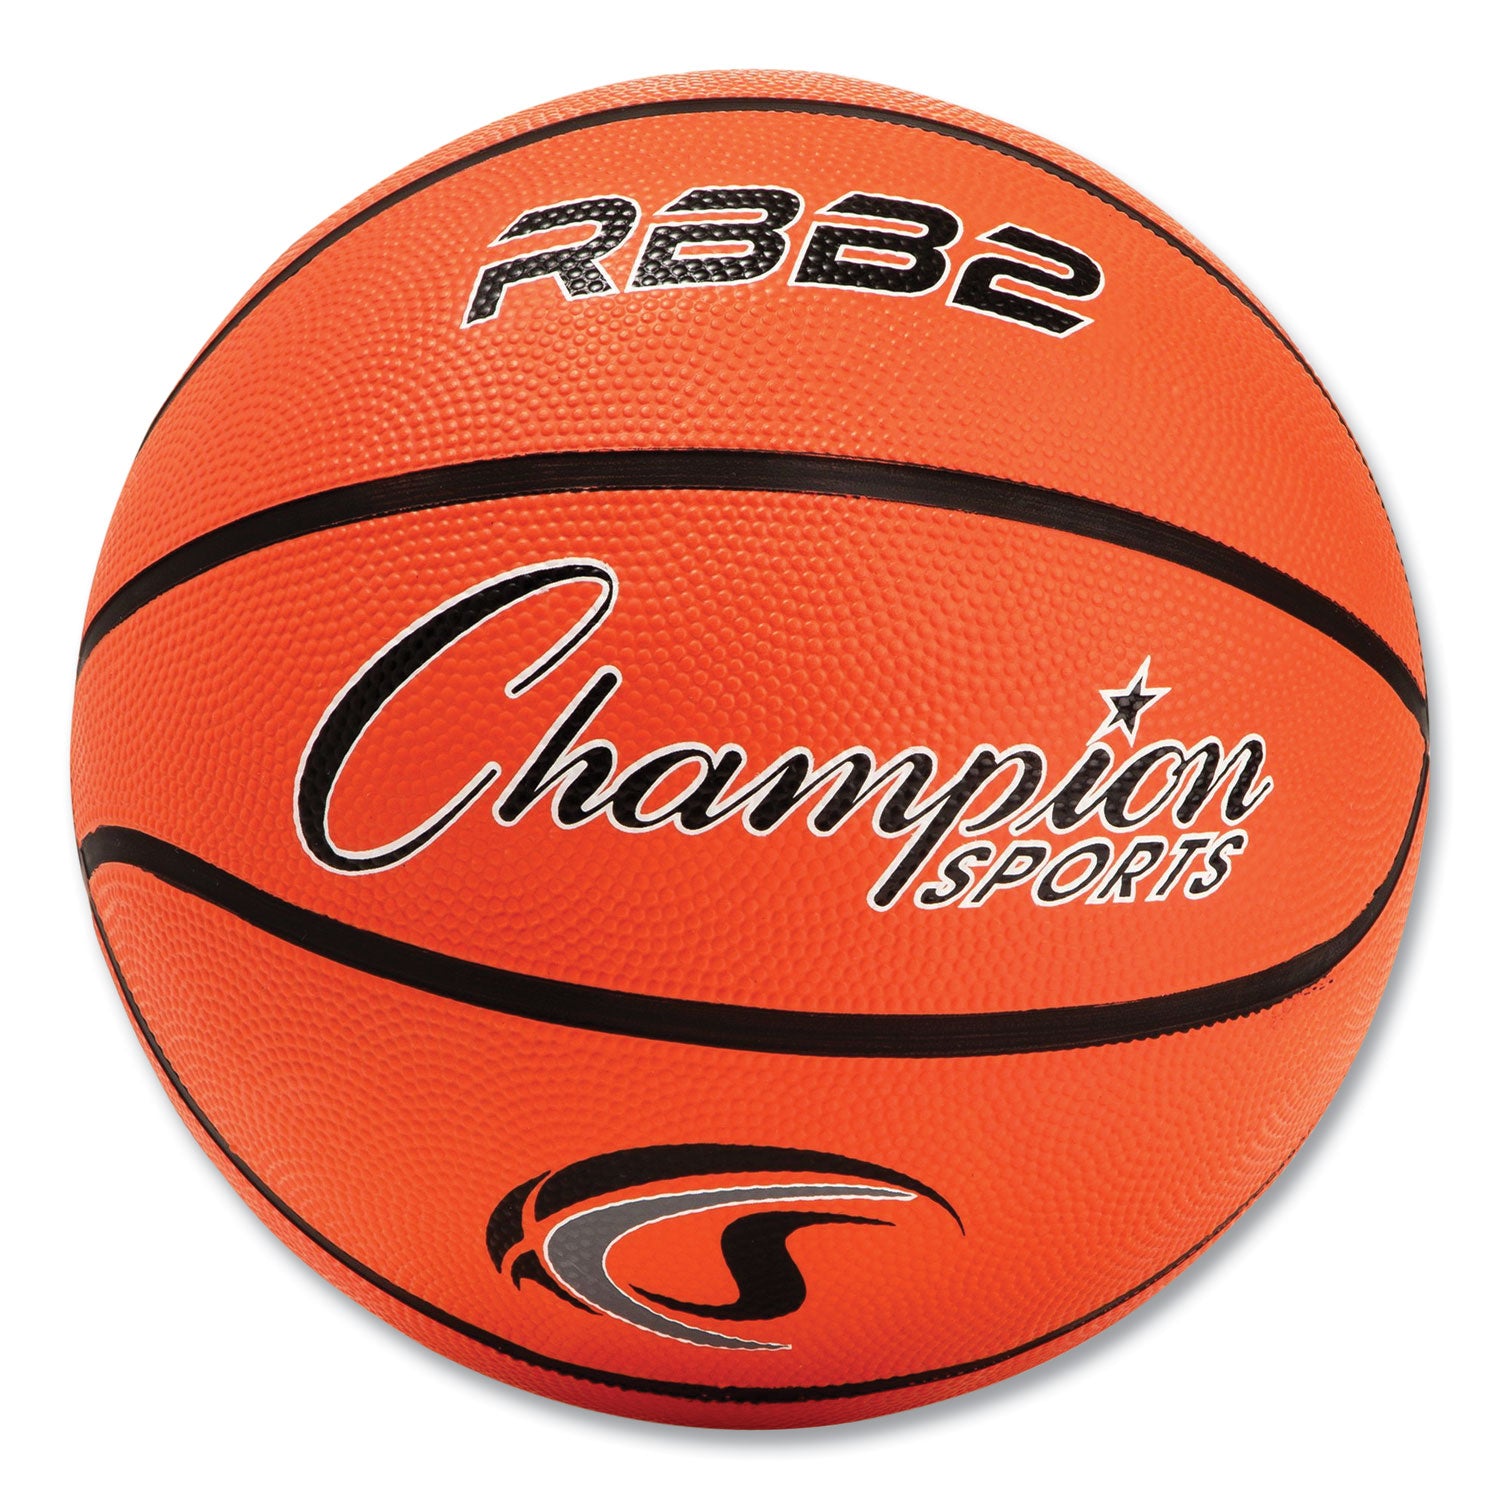 rubber-sports-ball-for-basketball-no-5-junior-size-orange_csirbb2 - 1